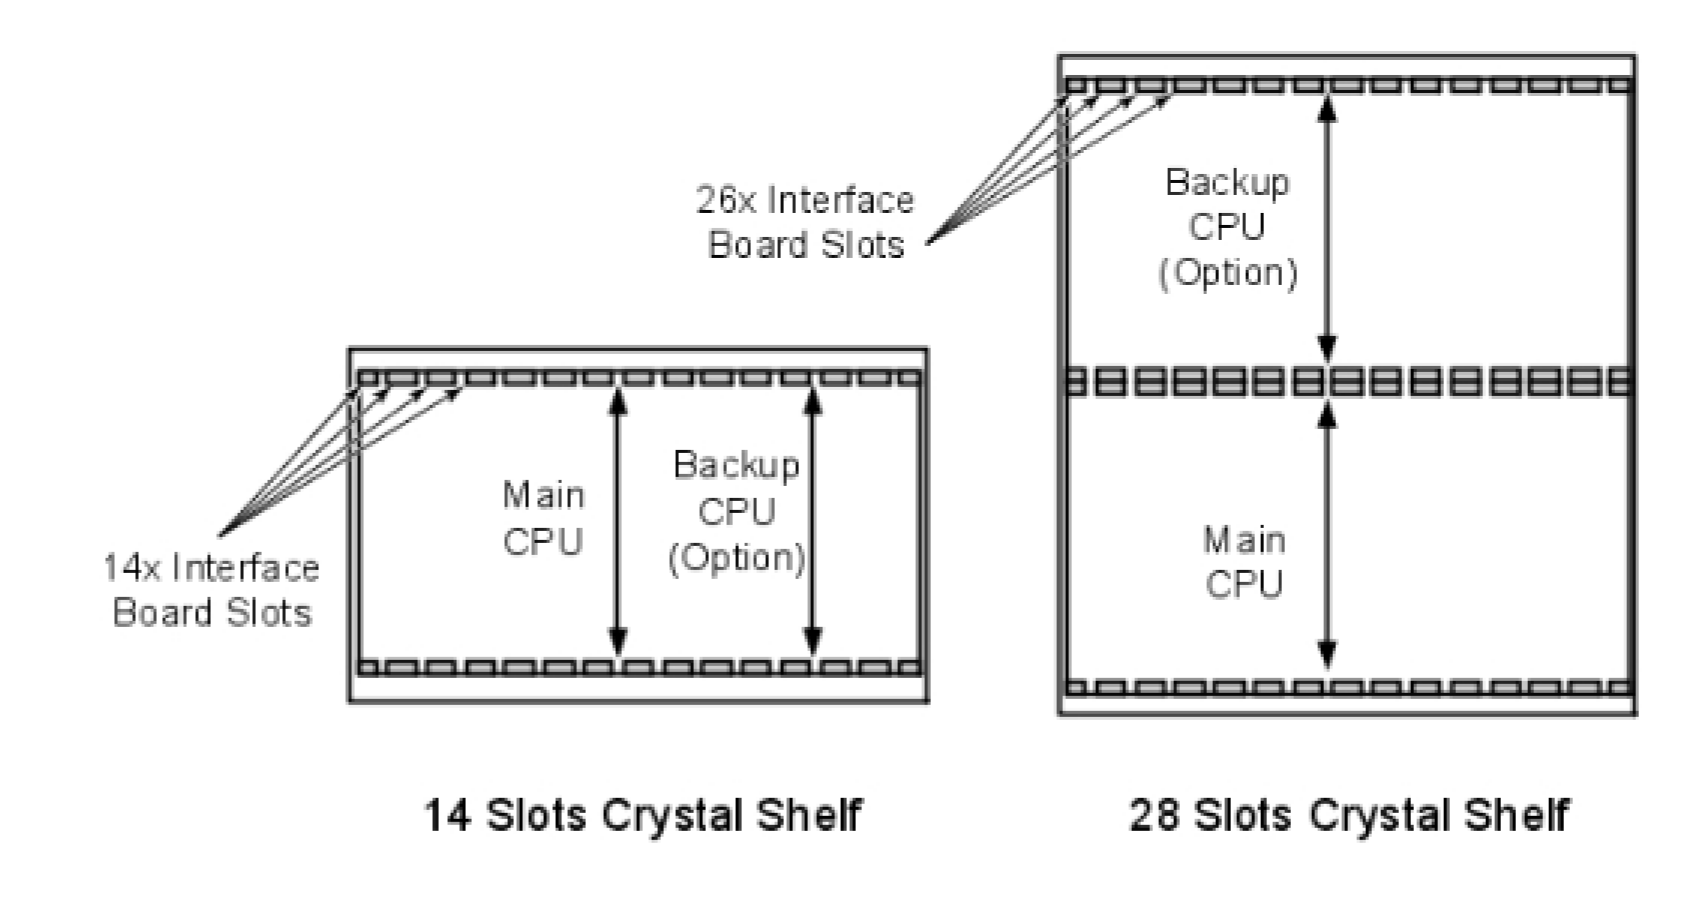 Slots Crystal Shelf